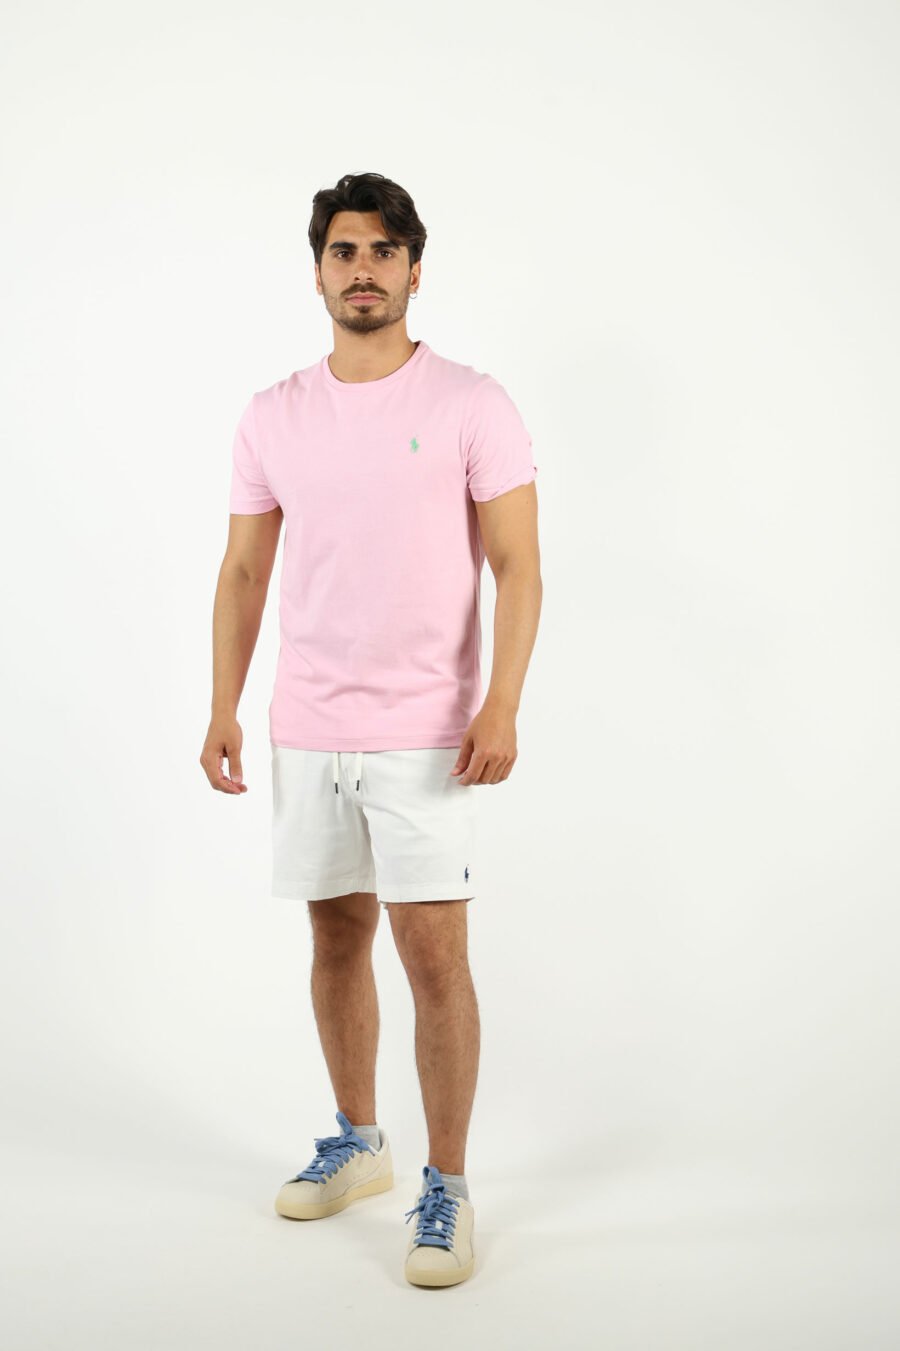 Camiseta rosa con minilogo "polo" verde - number14054